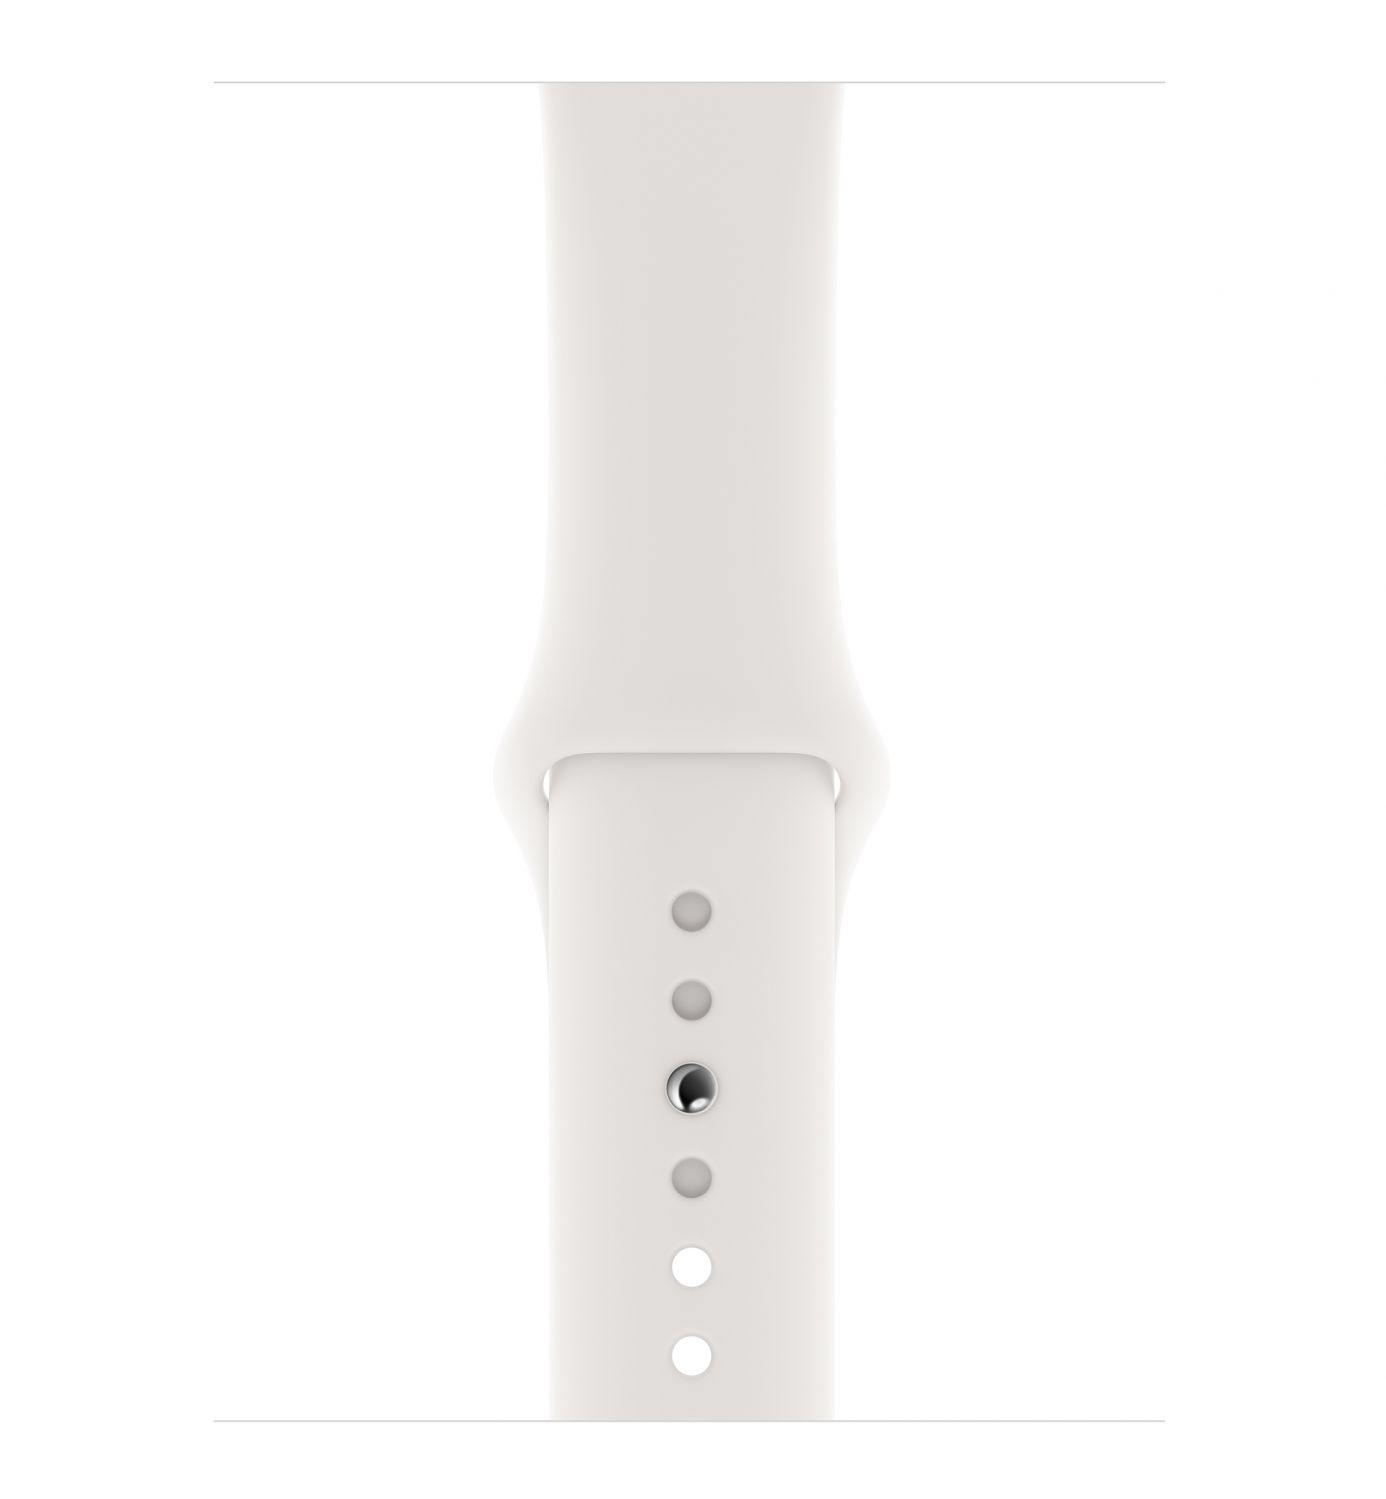 MU6A2TY/A - Reloj inteligent Apple Watch Seri 4 reloj inteligente Plata OLED GP (satlite)